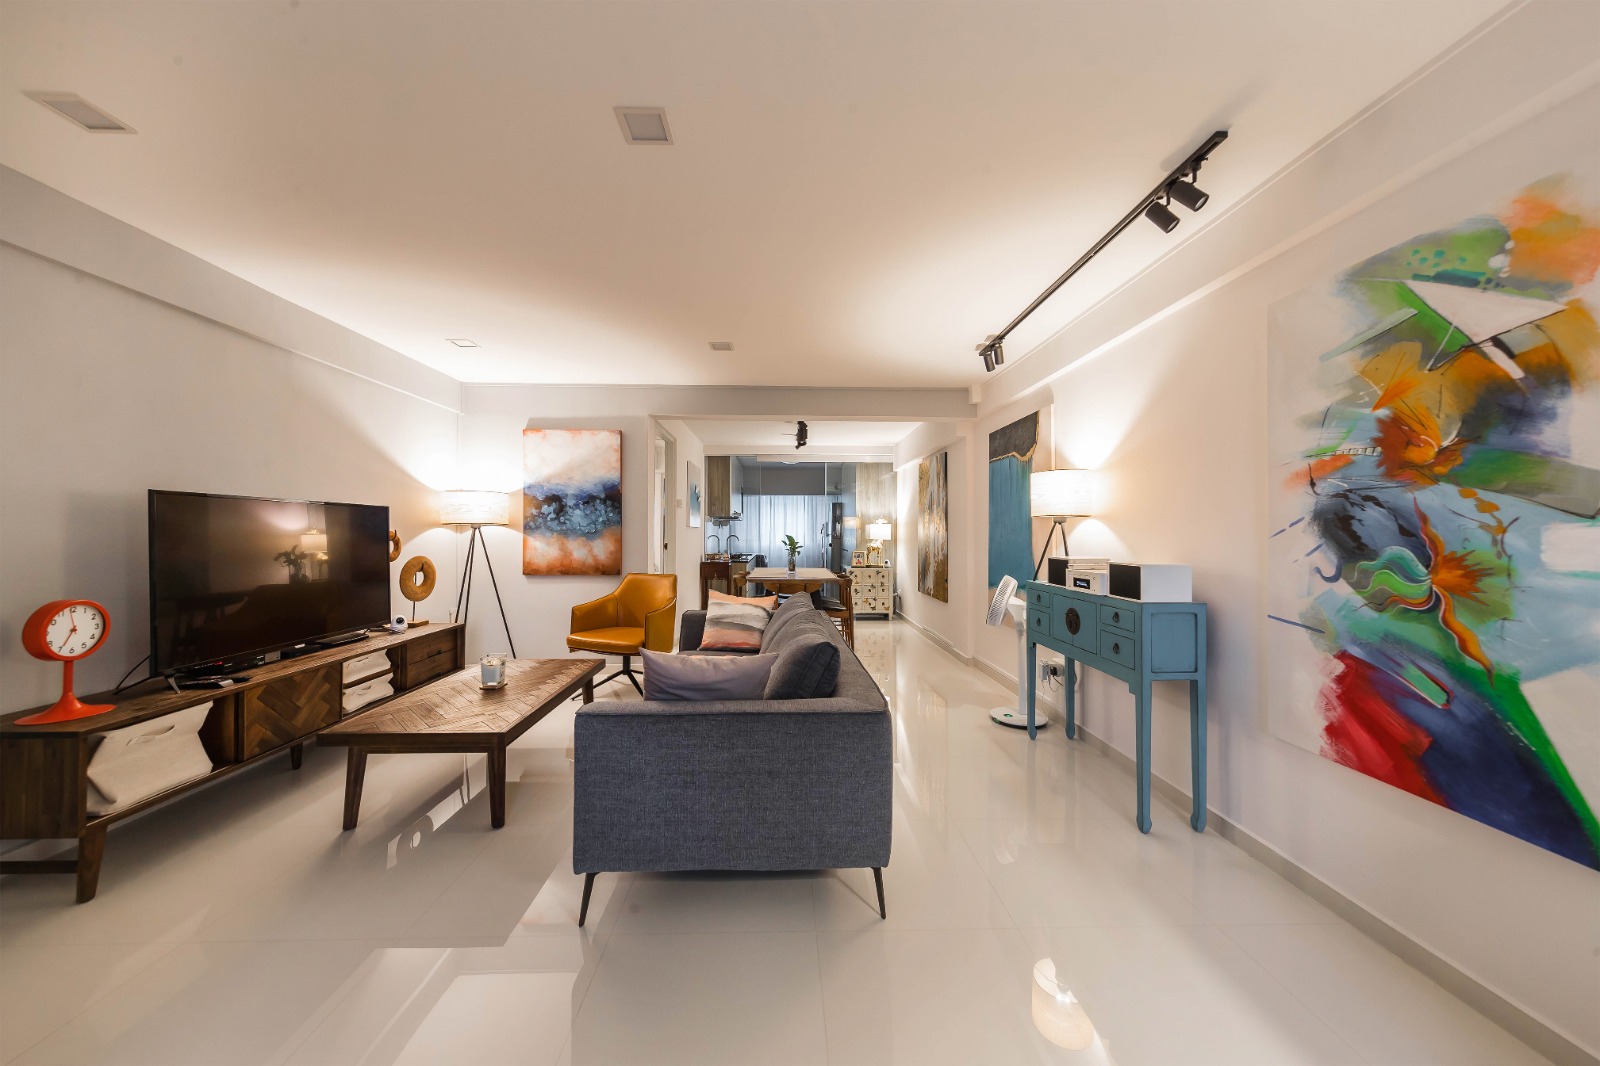 Eclectic, Retro Design - Living Room - HDB 4 Room - Design by Renozone Interior Design House